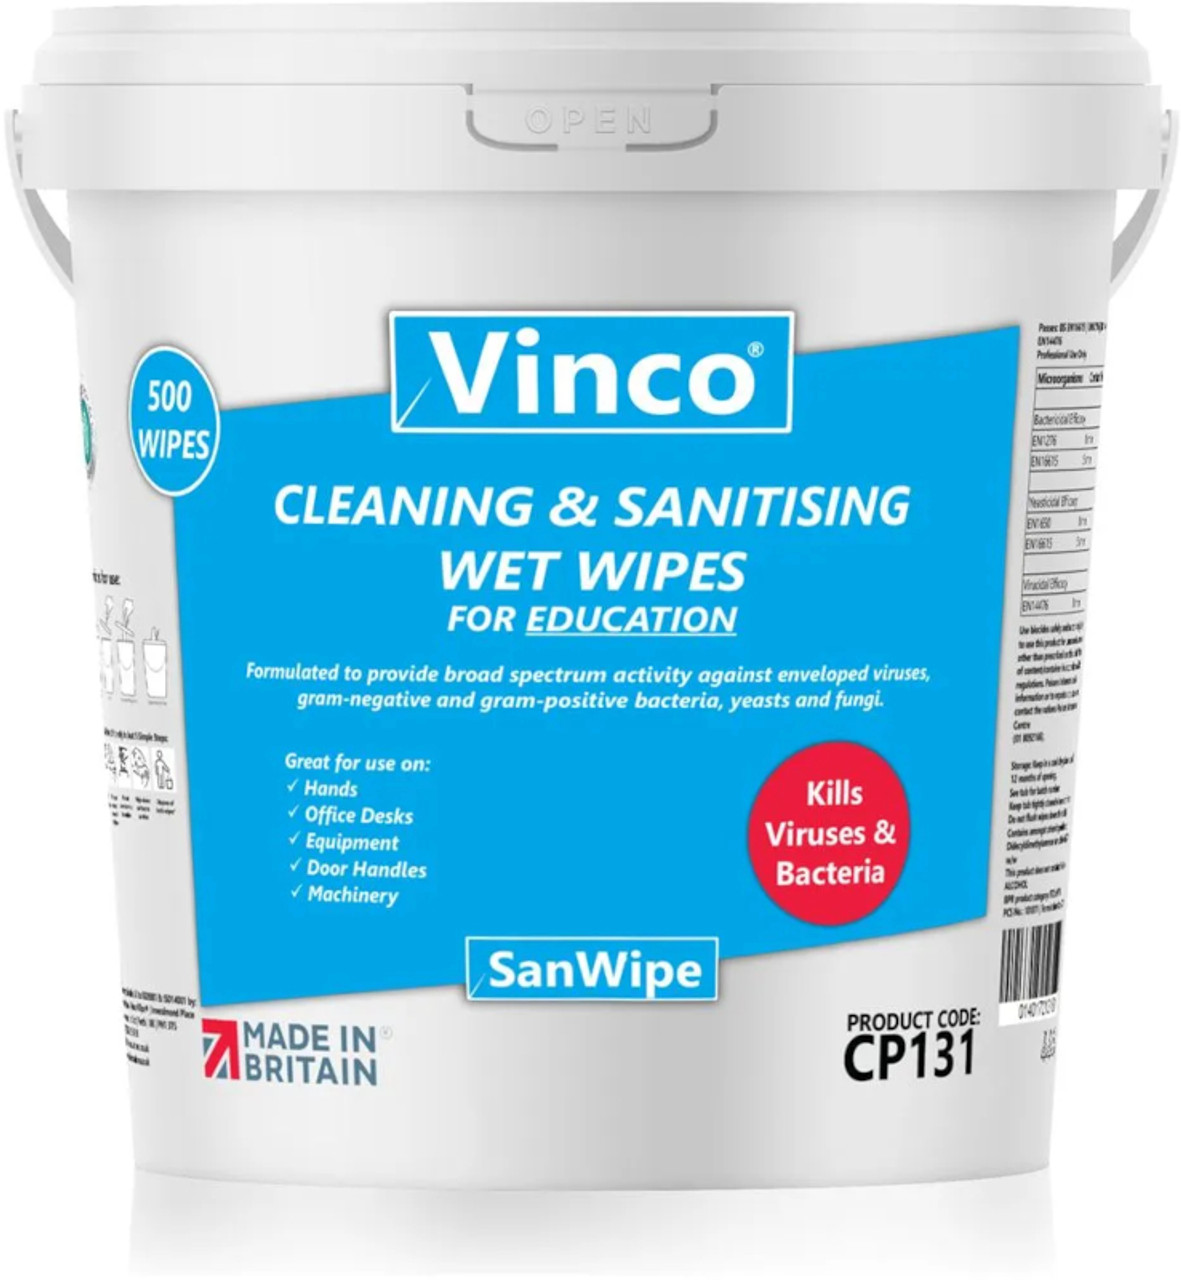 Vinco-SanWipe Education Sanitising Wipe - 500 Wipes - CP131